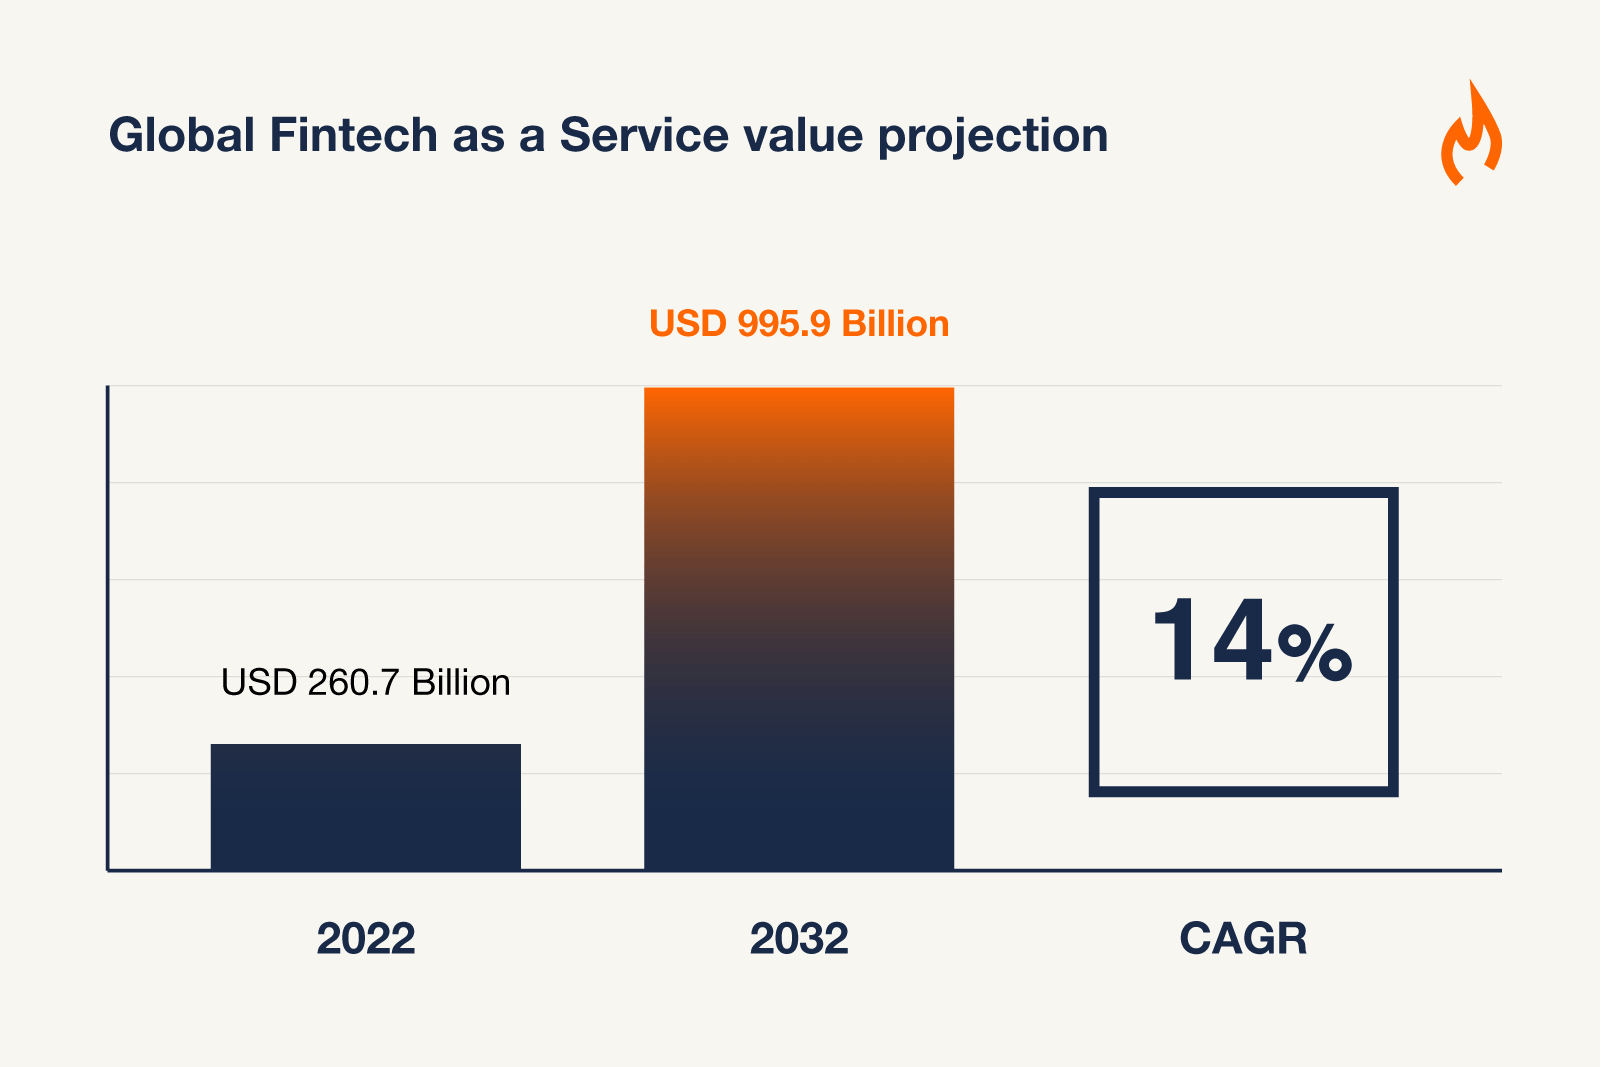 Fintech as a Service - Market growth projection